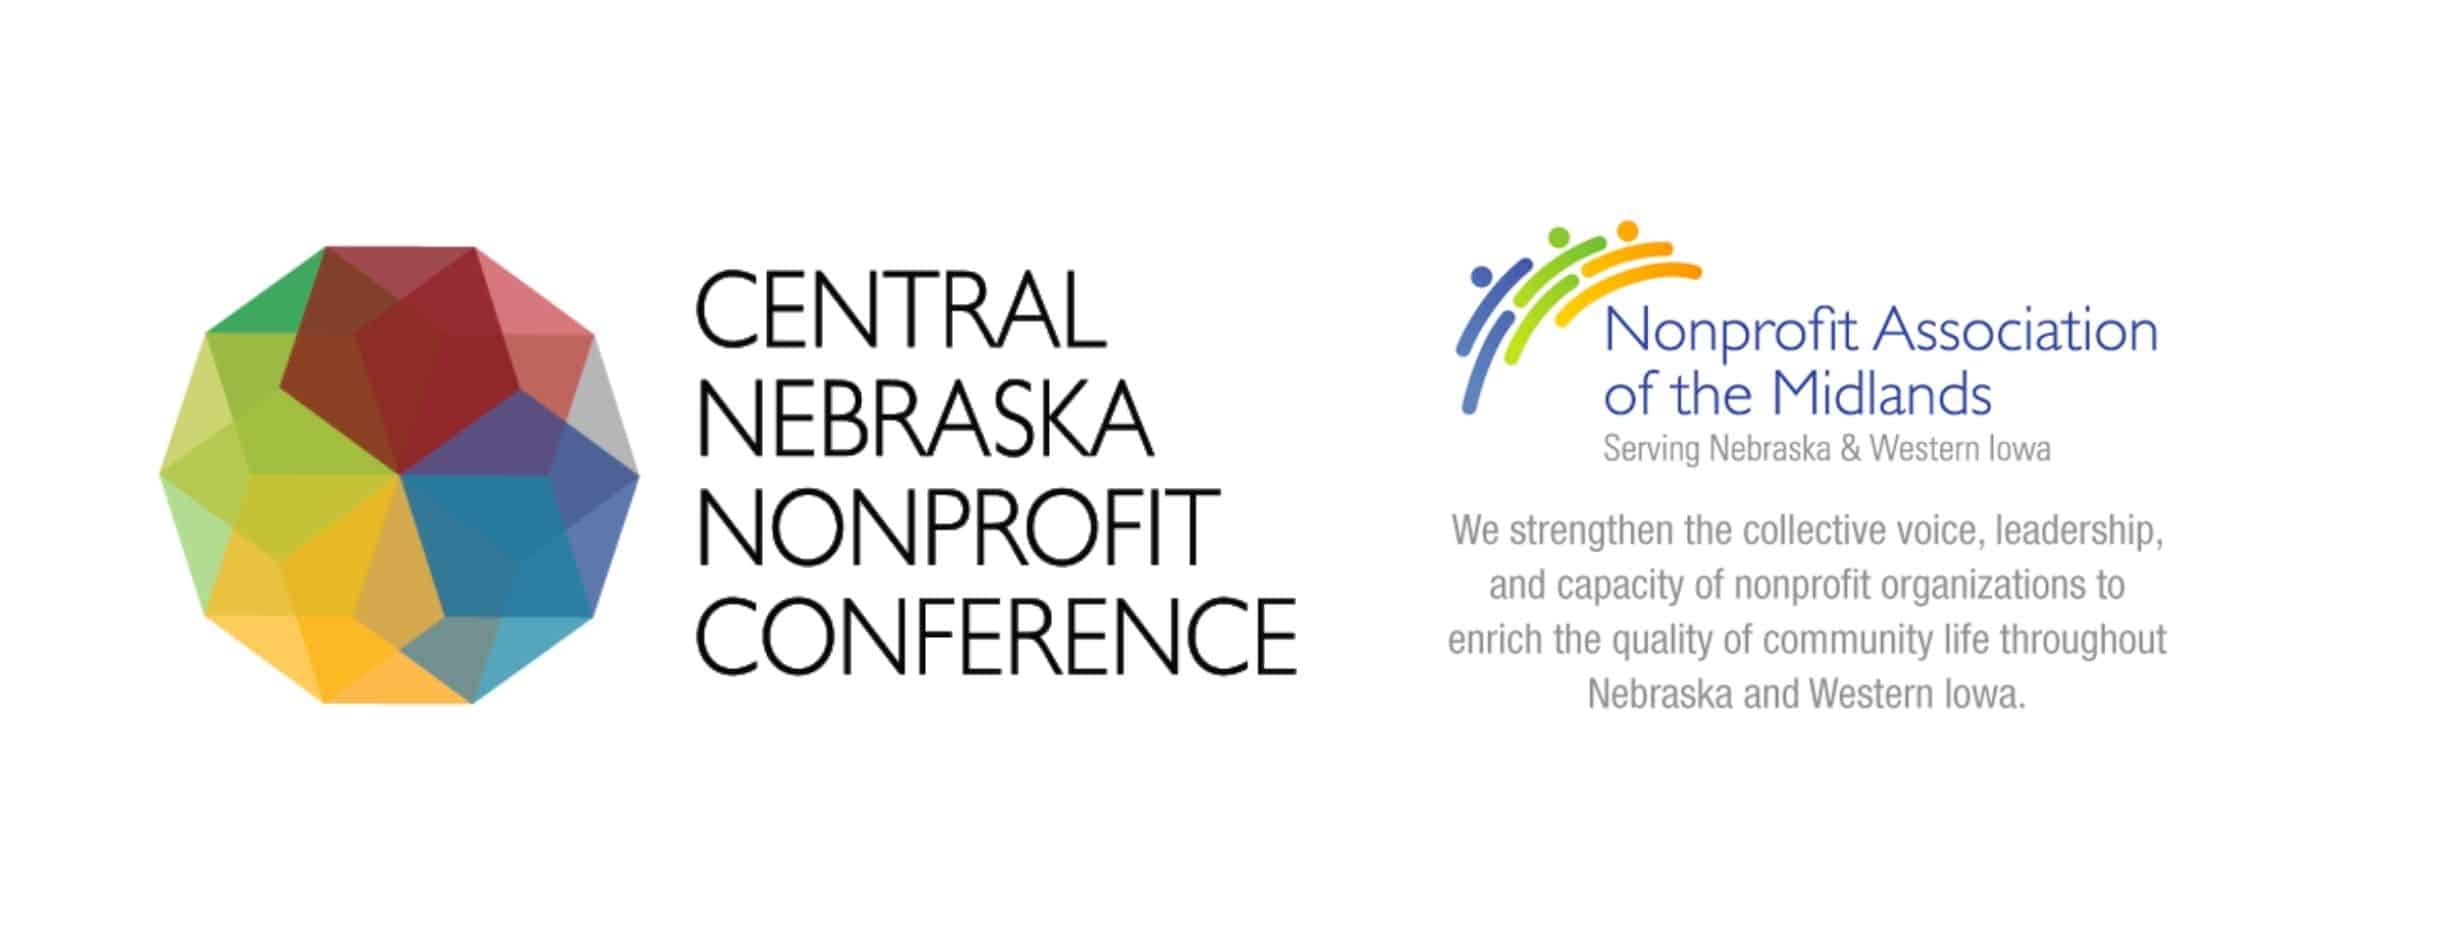 Central Nebraska Nonprofit Conference with Nonprofit Association of the Midlands